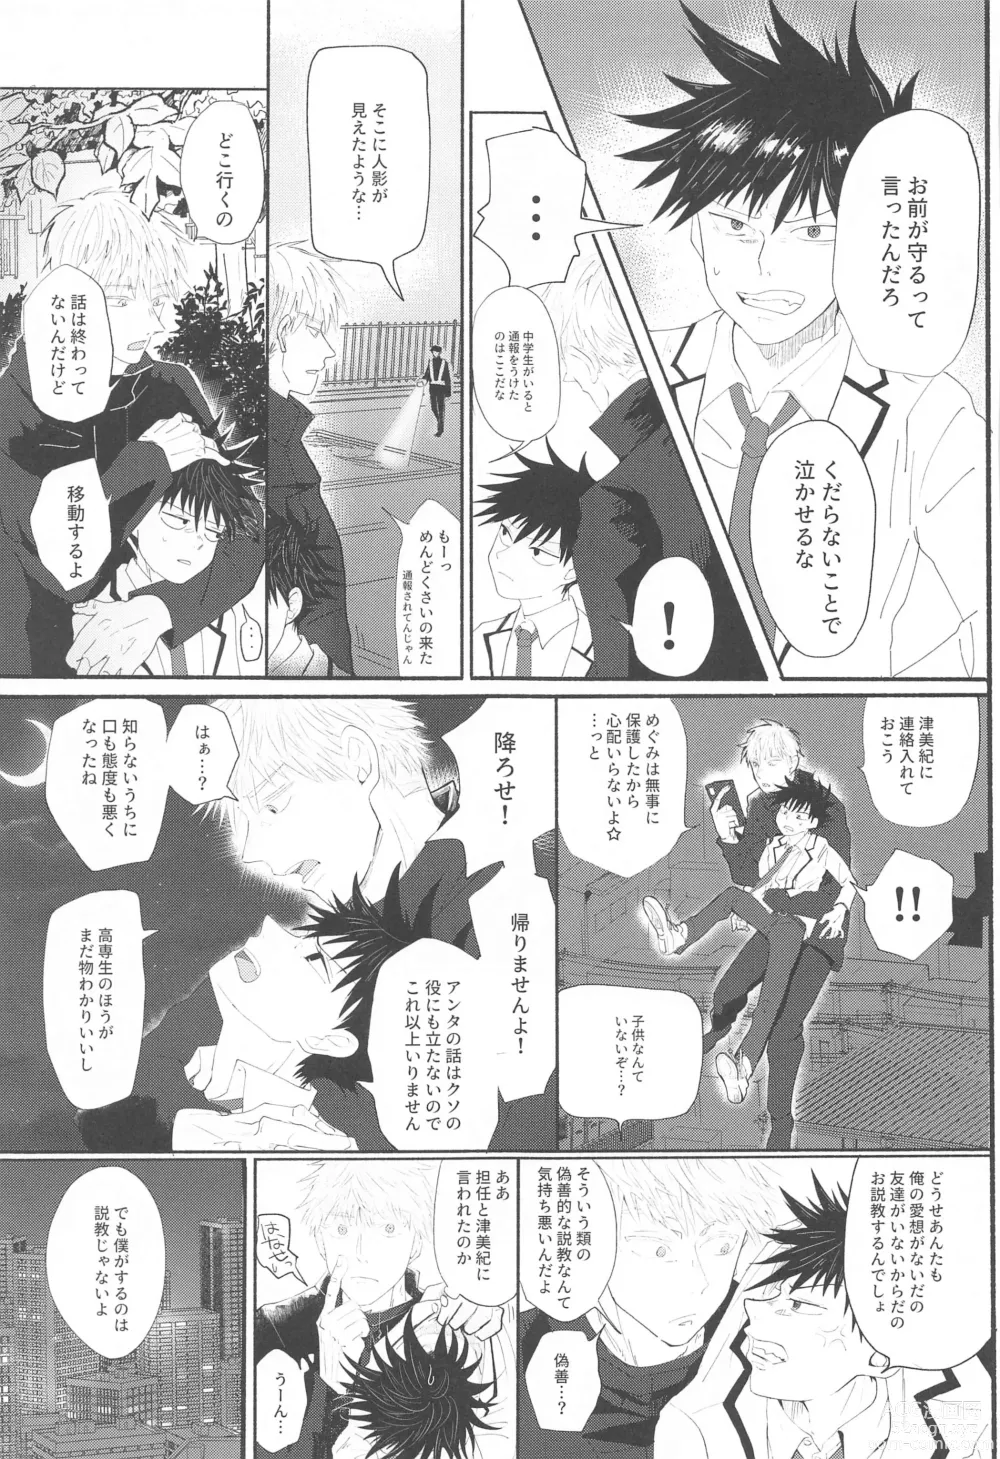 Page 6 of doujinshi Fusenai Inu